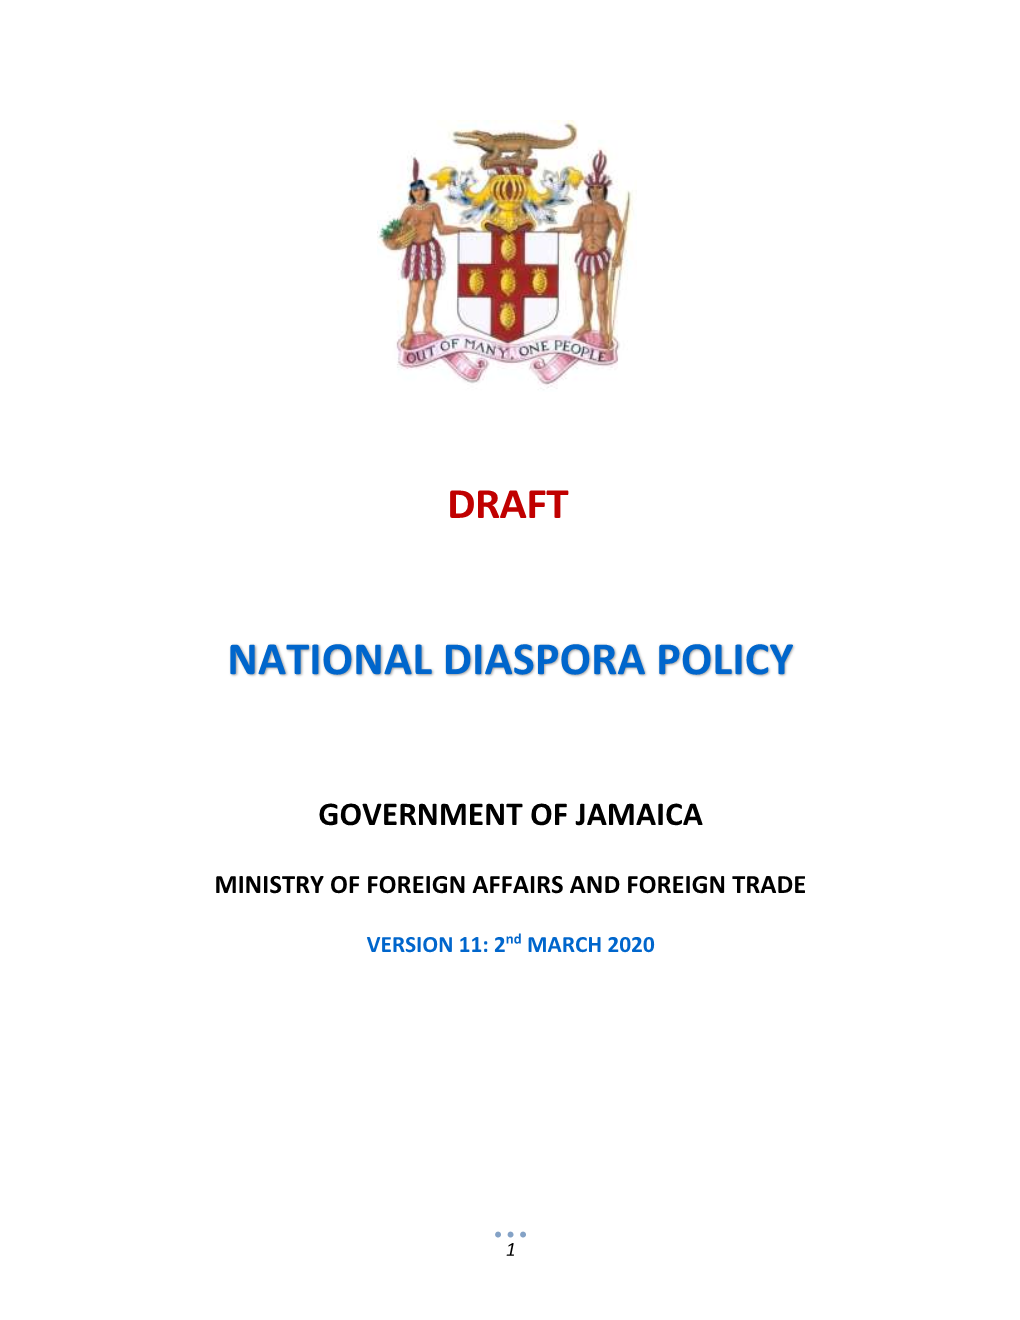 Drafted a National Diaspora Policy